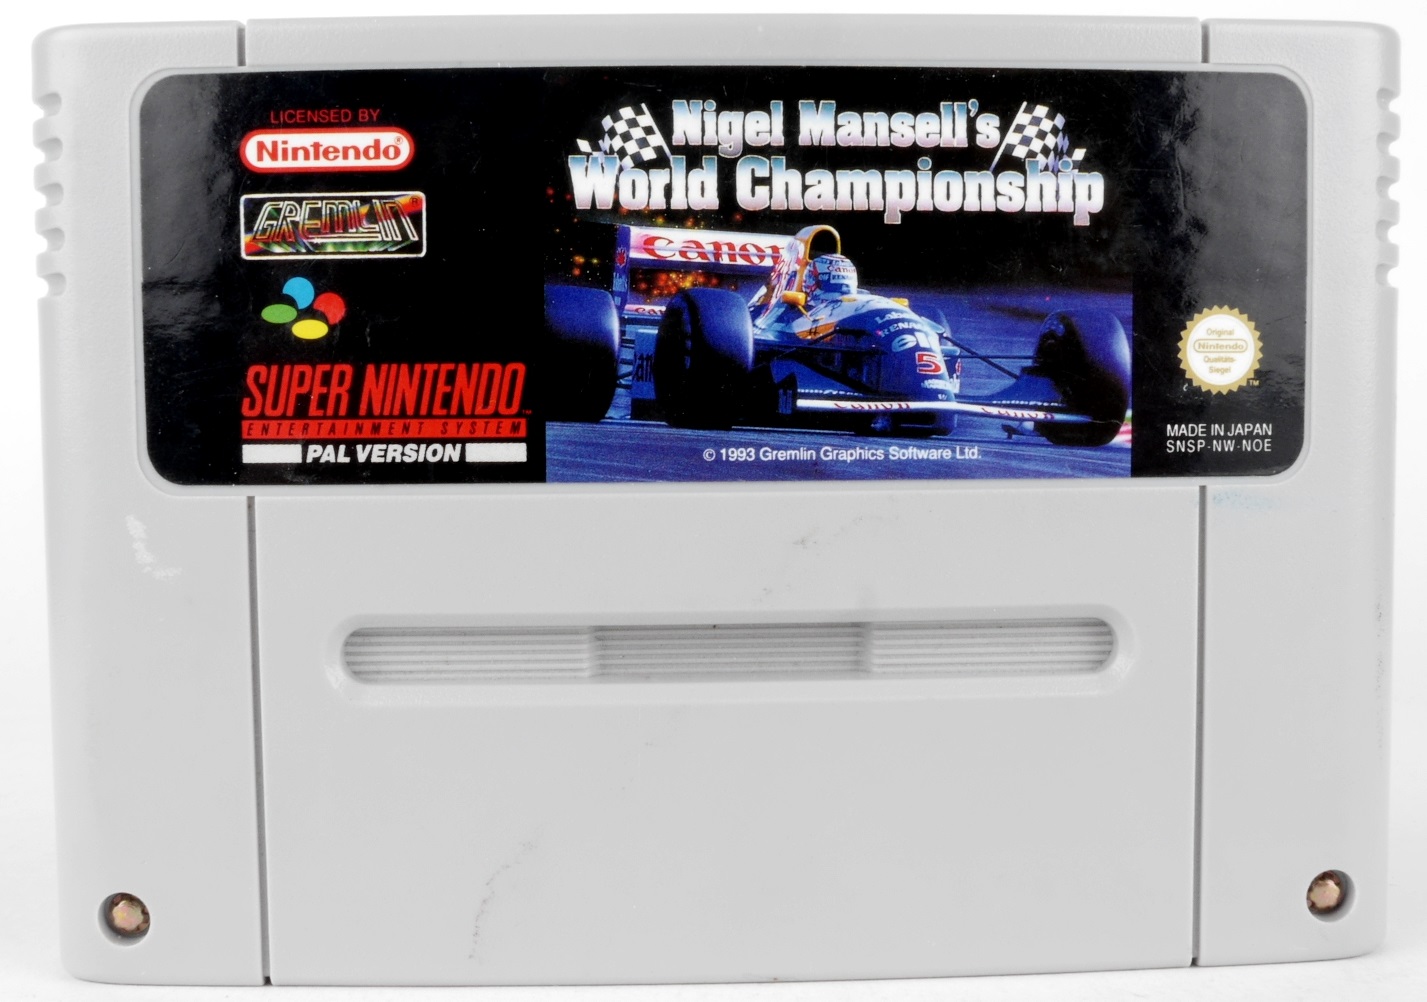 Nigel Mansell’s World Championship Racing SNES